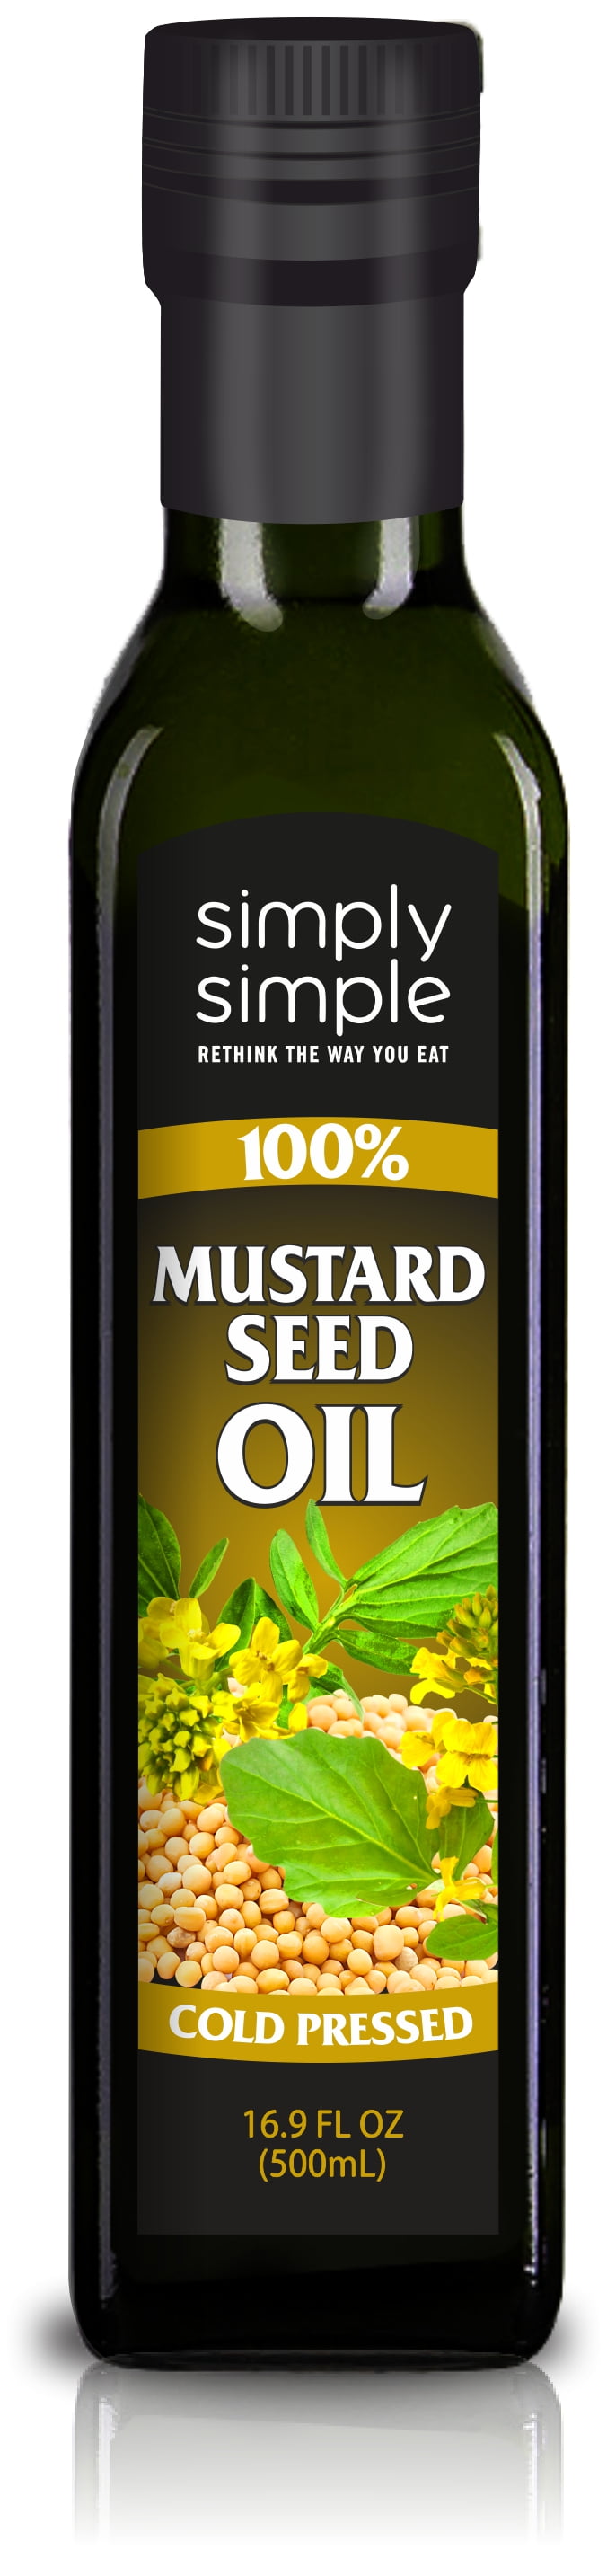 Simply Simple Mustard Seed Oil - Walmart.com